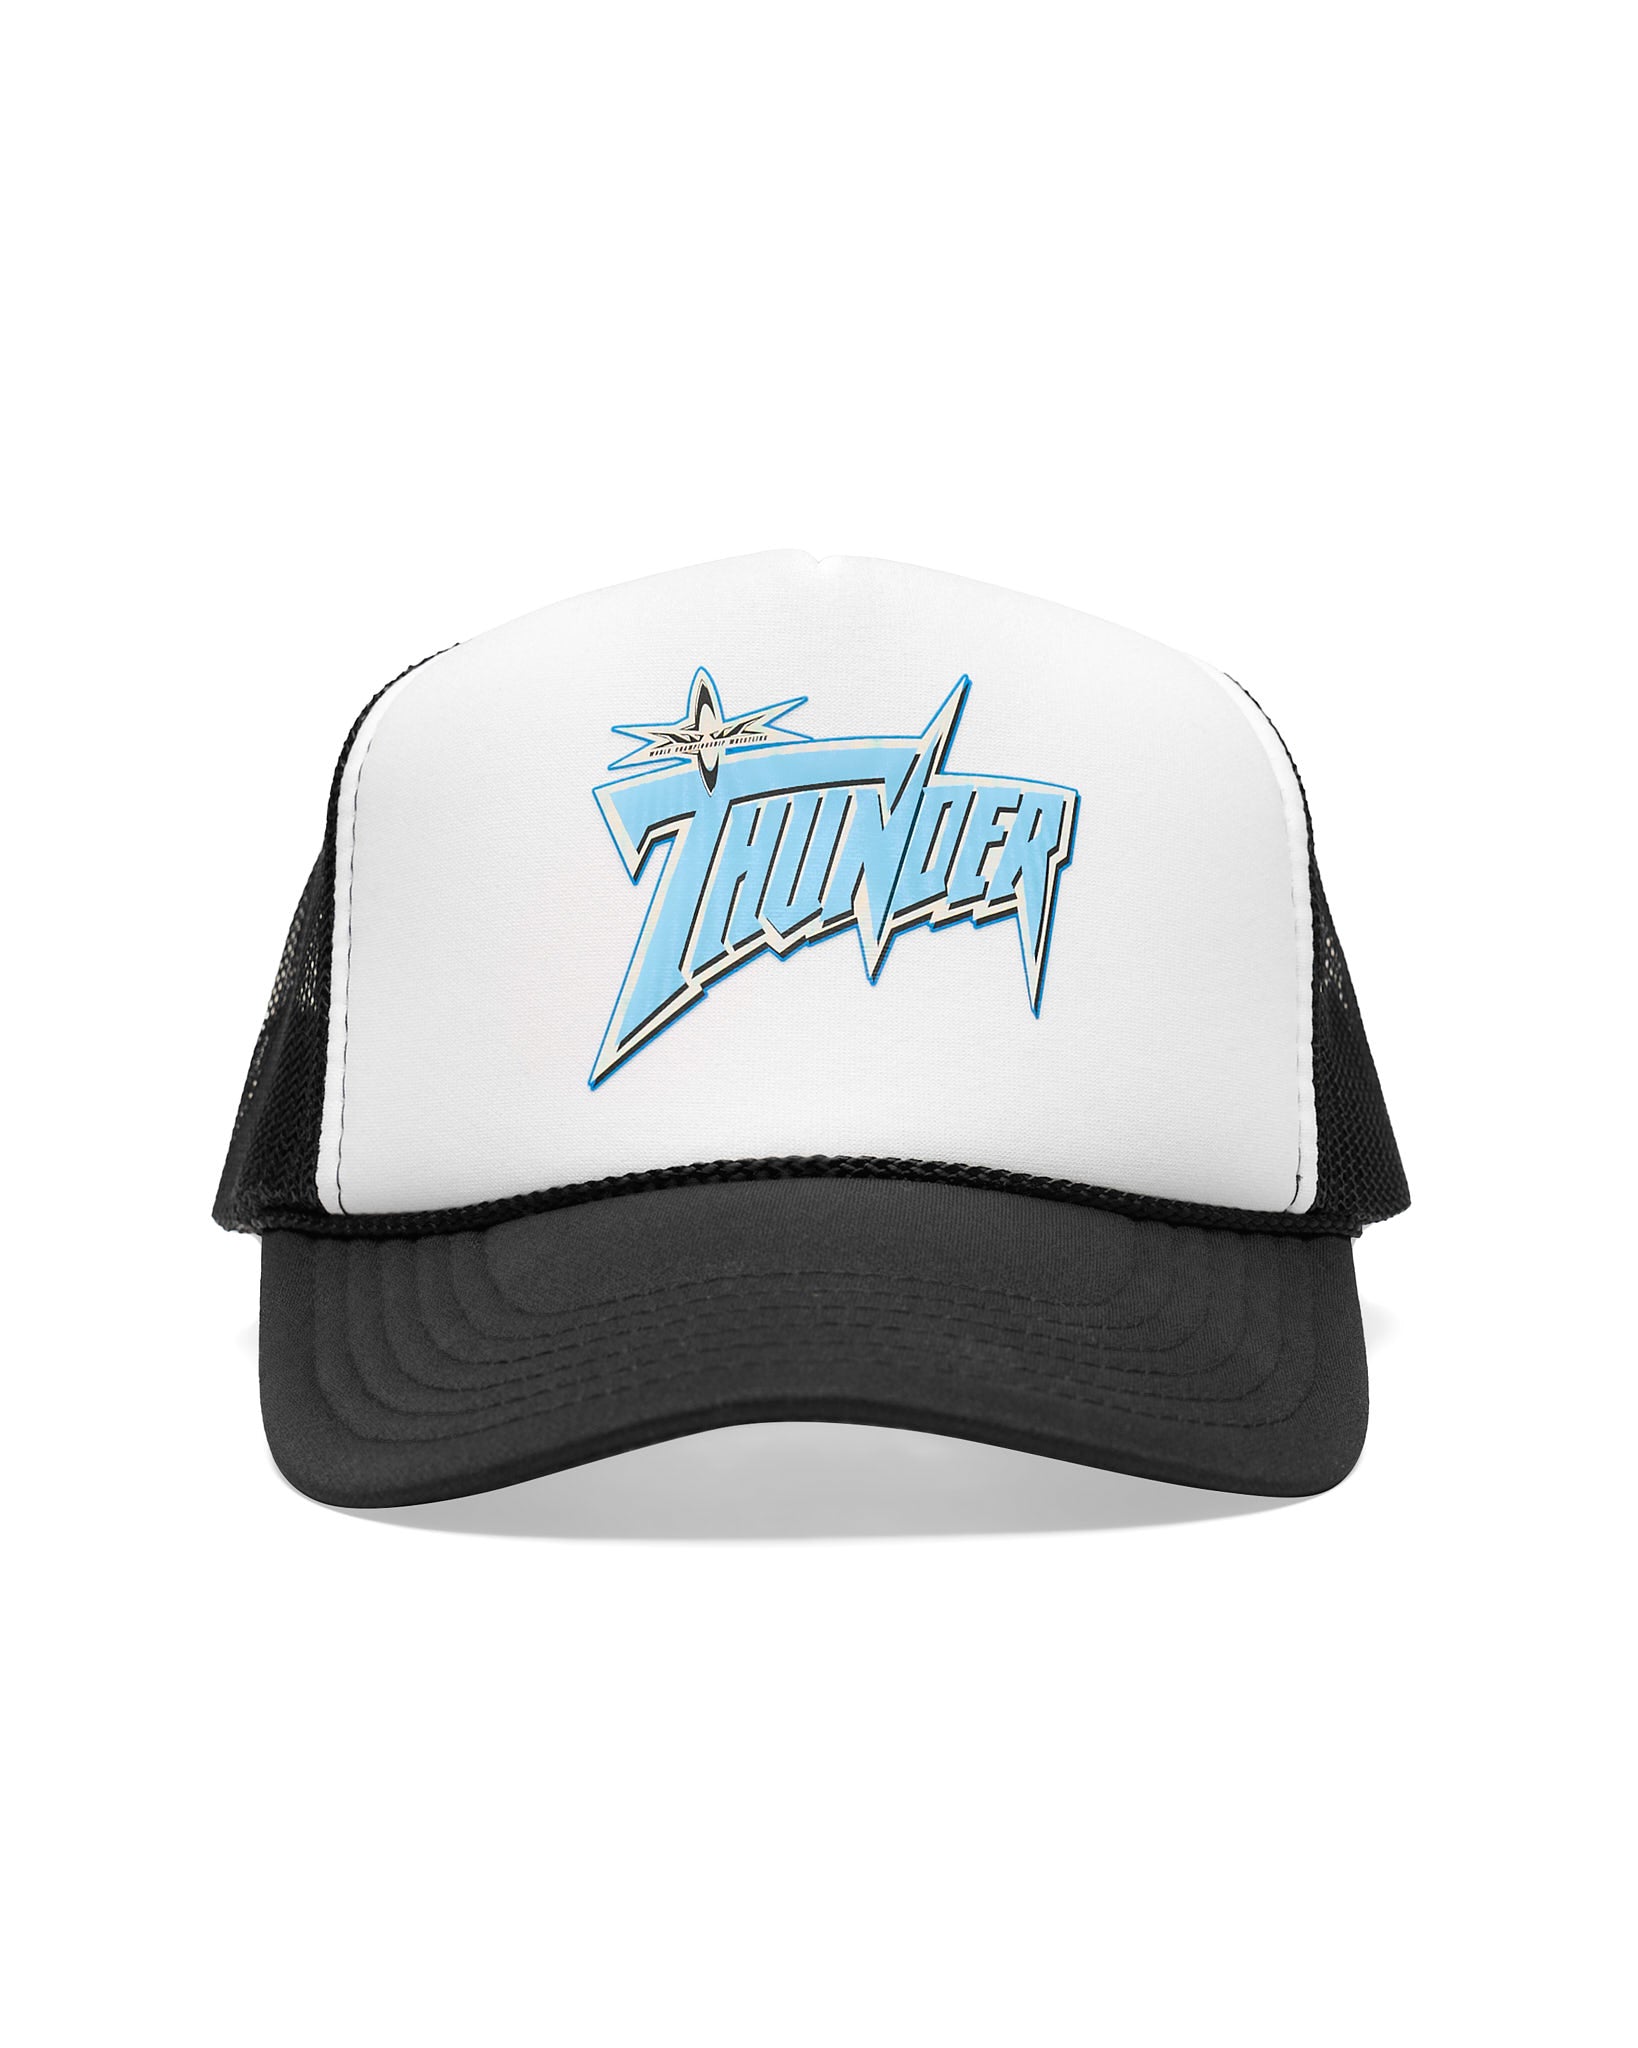 Wcw Thunder Trucker Hat - One Size